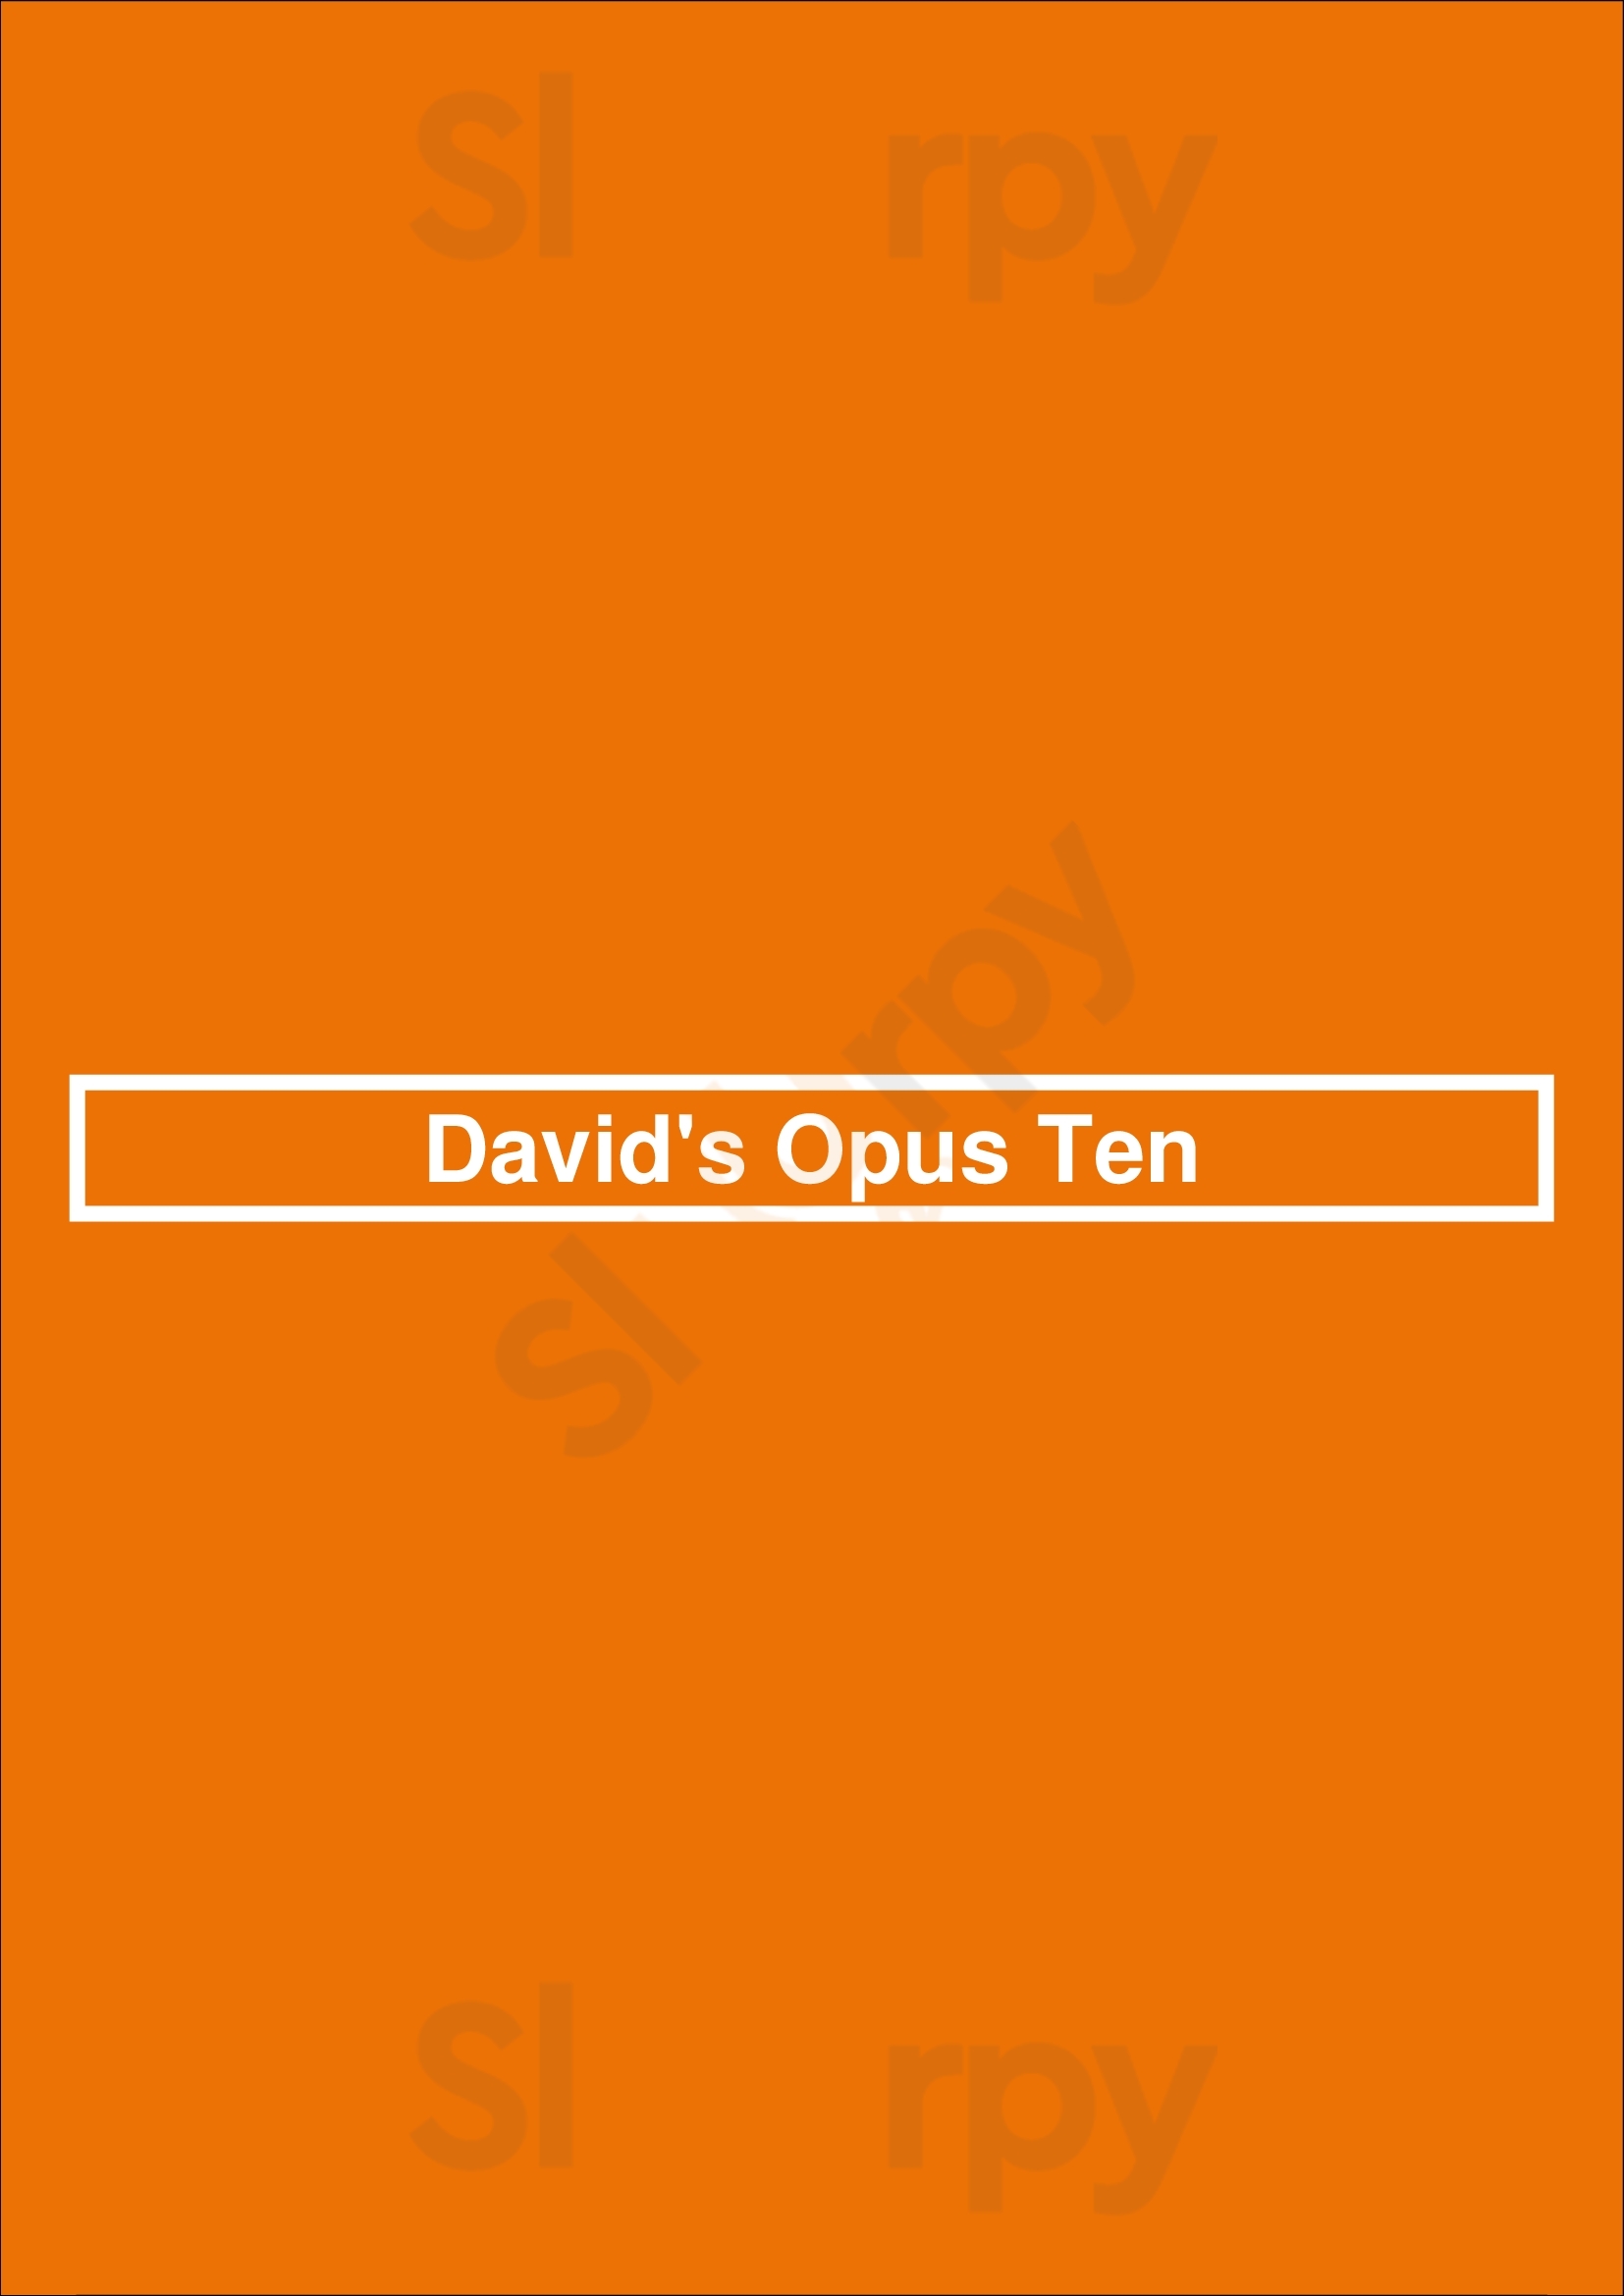 David's Opus Ten Portland Menu - 1